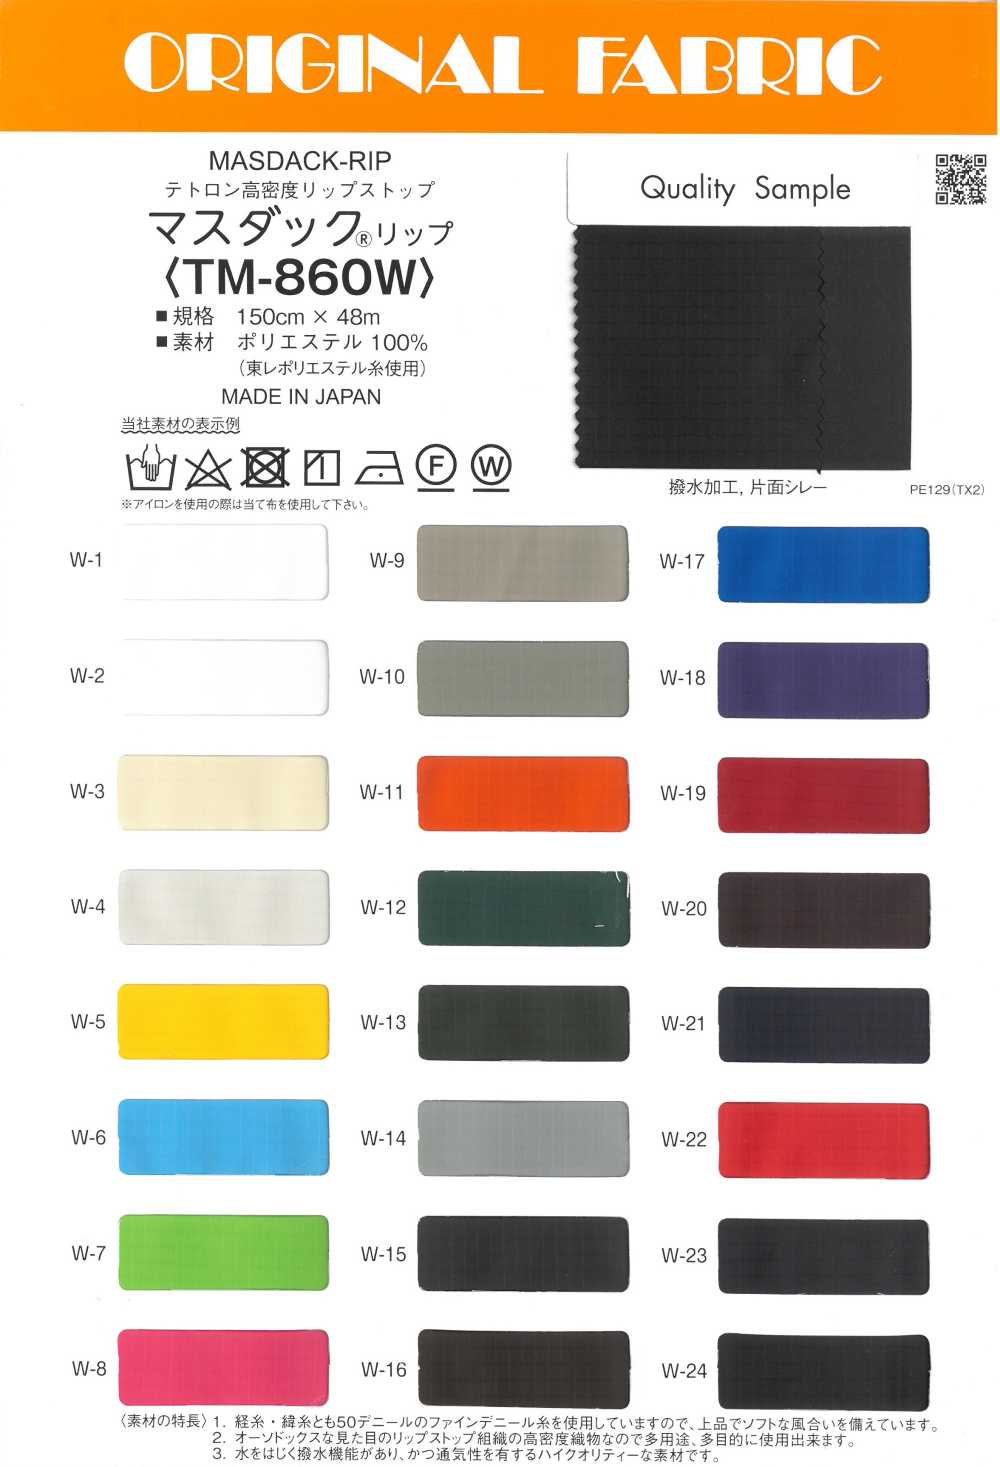 TM860W Masdaq® Lip Tetron Ripstop De Alta Densidad[Fabrica Textil] Masuda